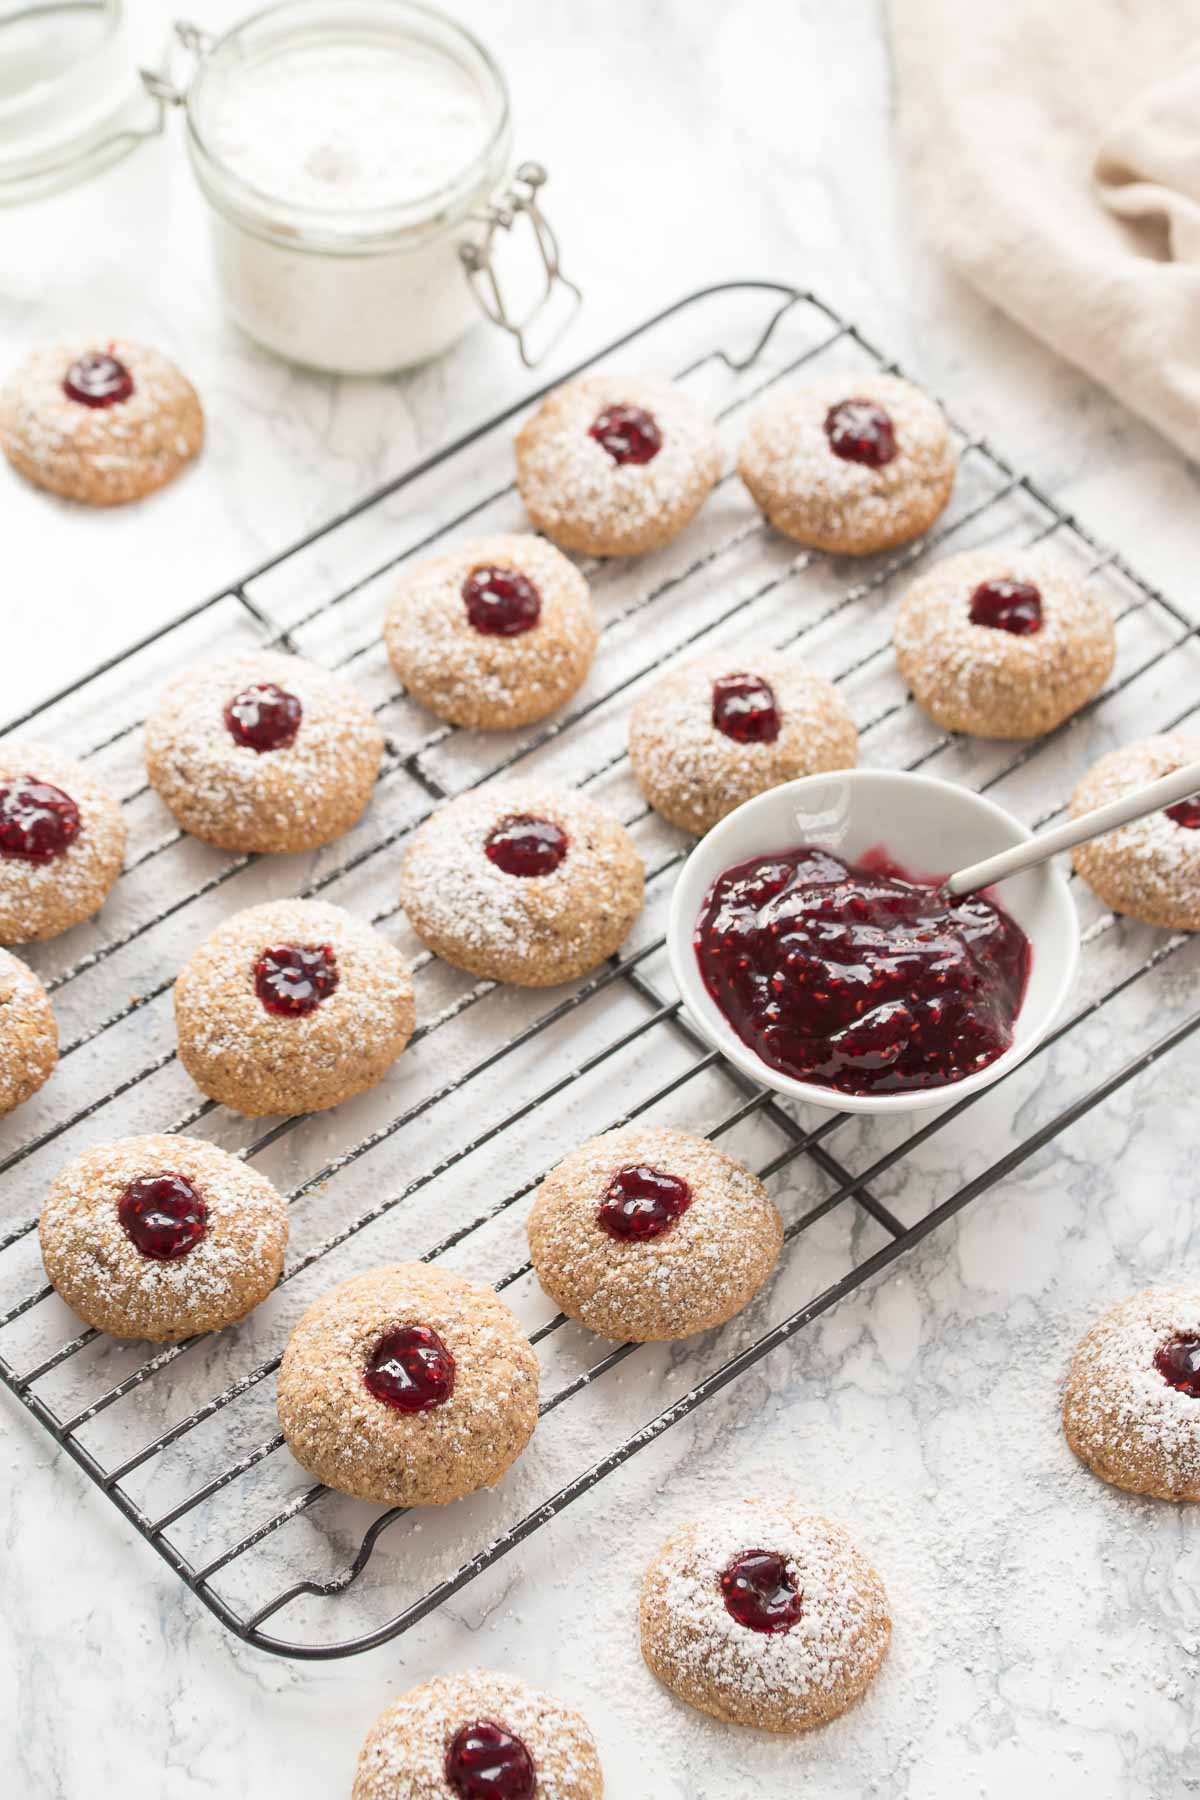 Gluten-free Thumbprint Cookies